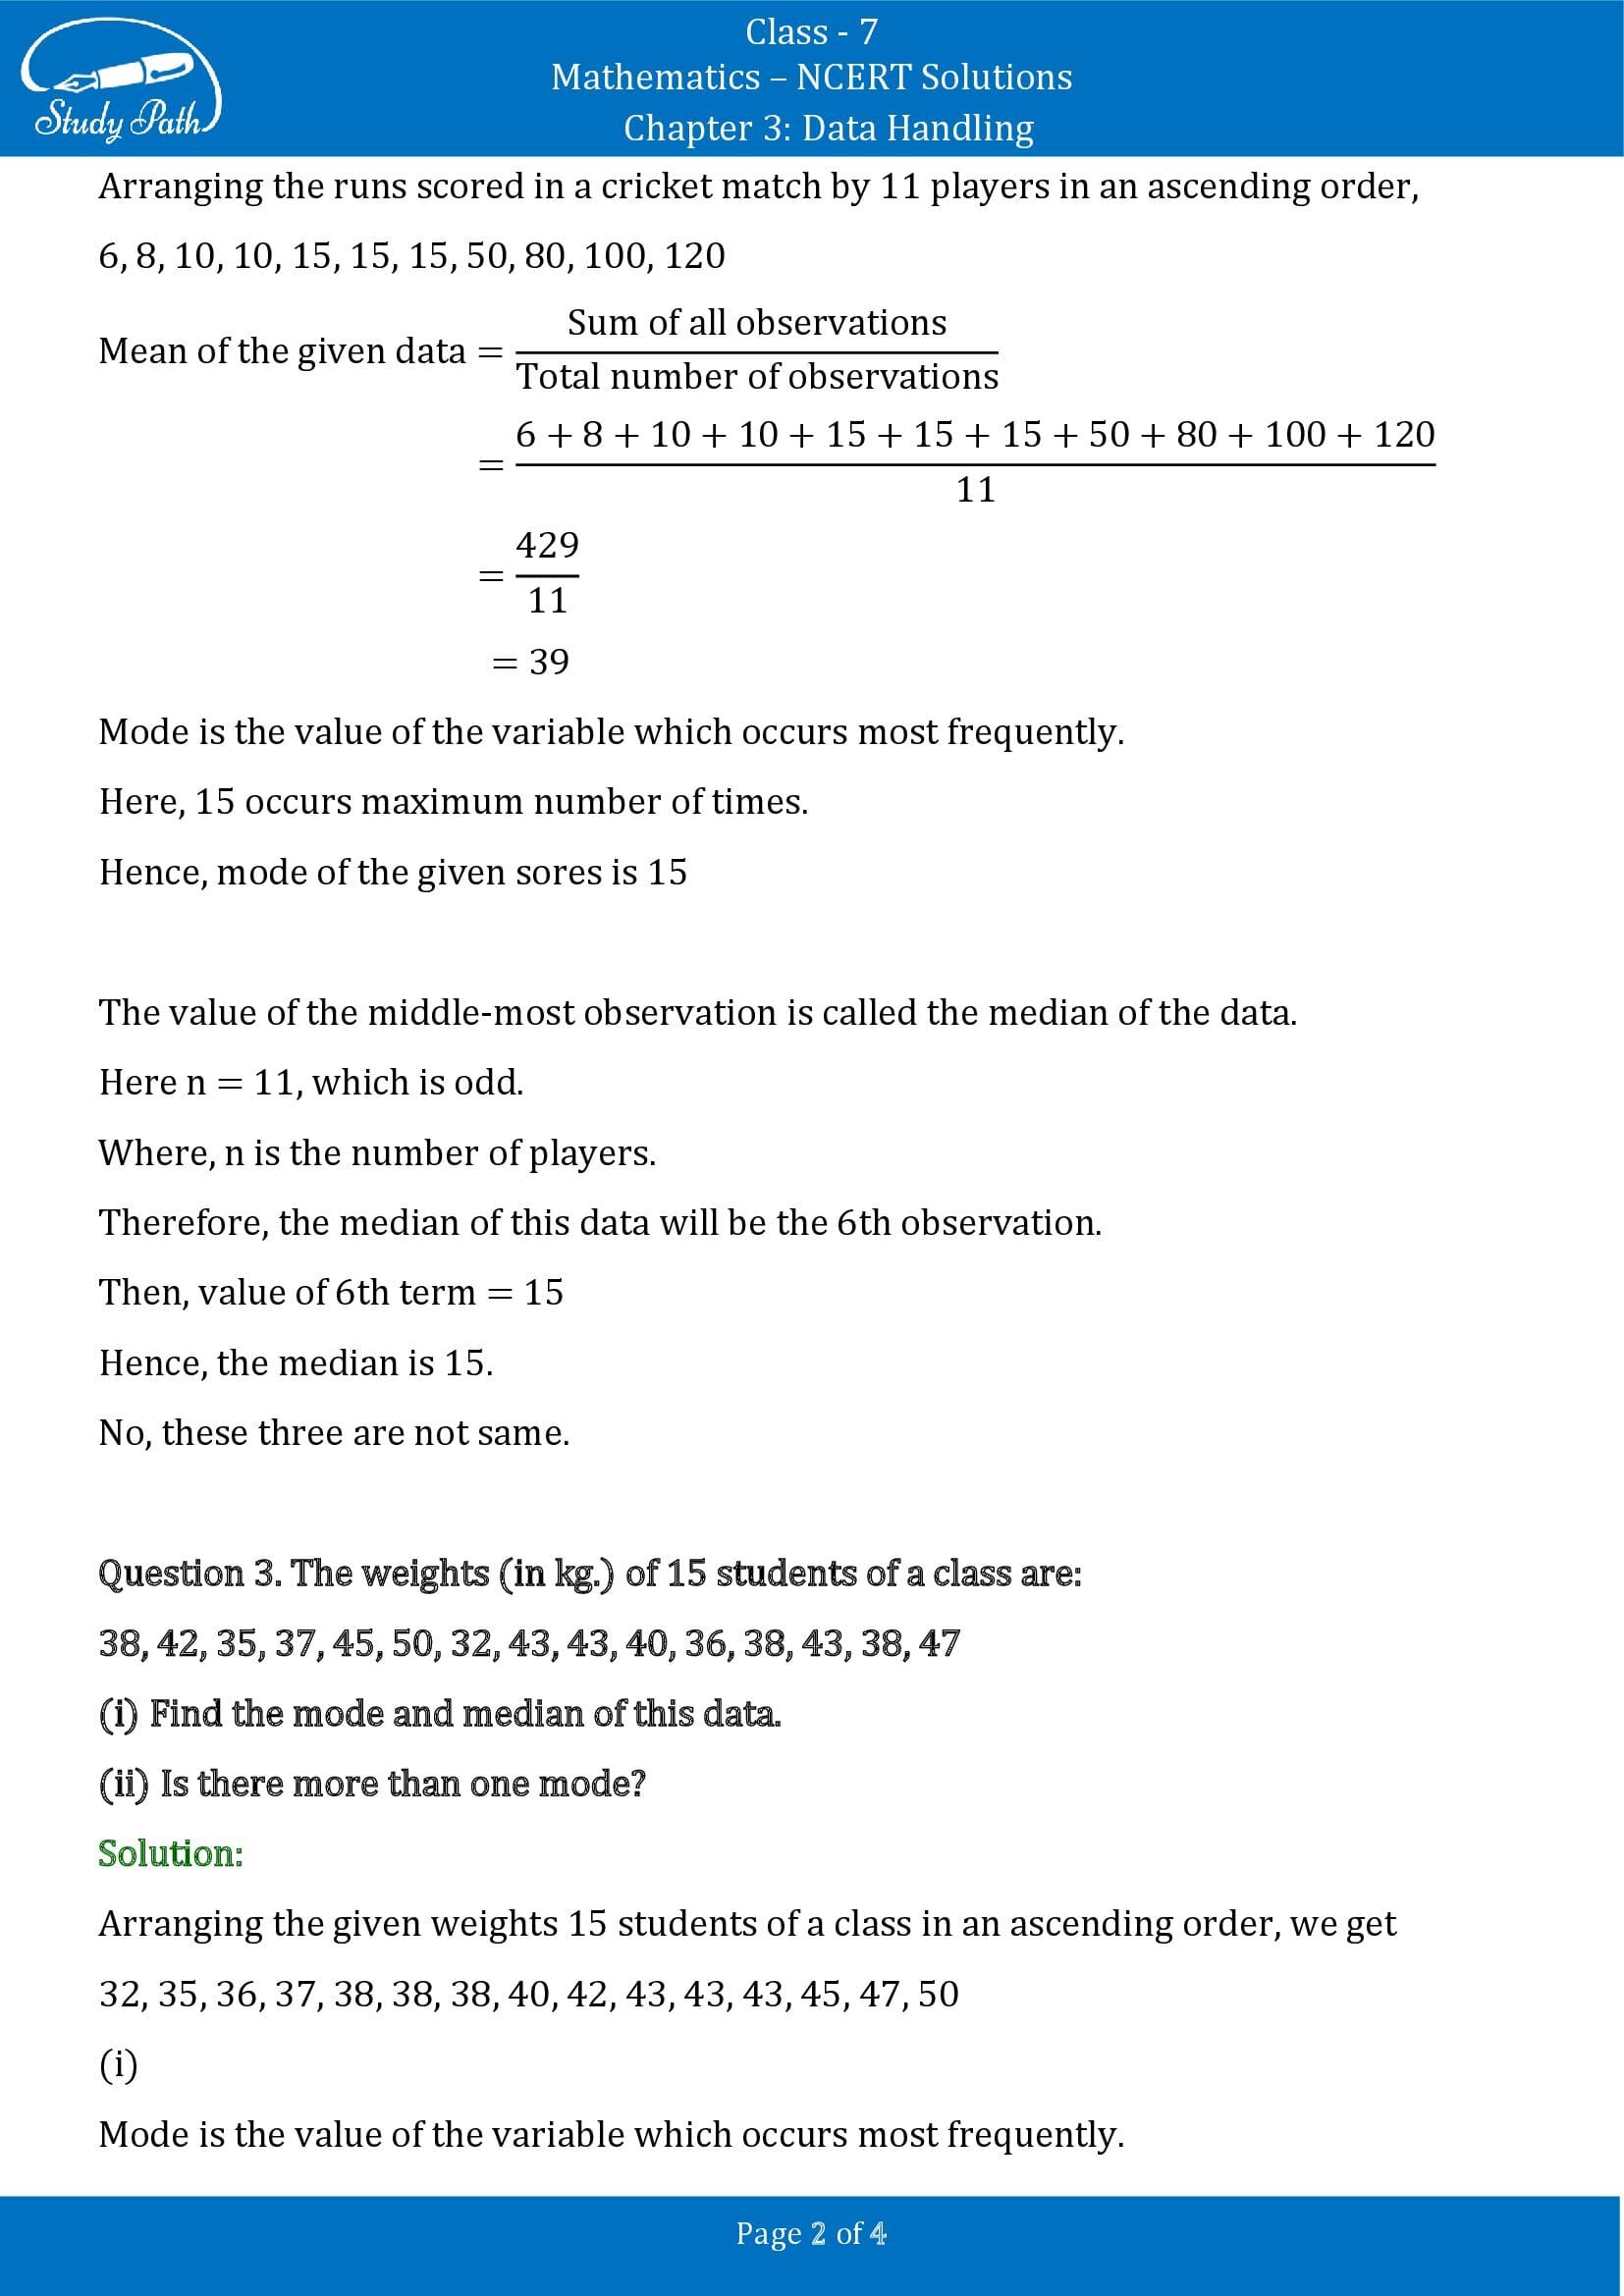 NCERT Solutions for Class 7 Maths Chapter 3 Data Handling Exercise 3.2 00002